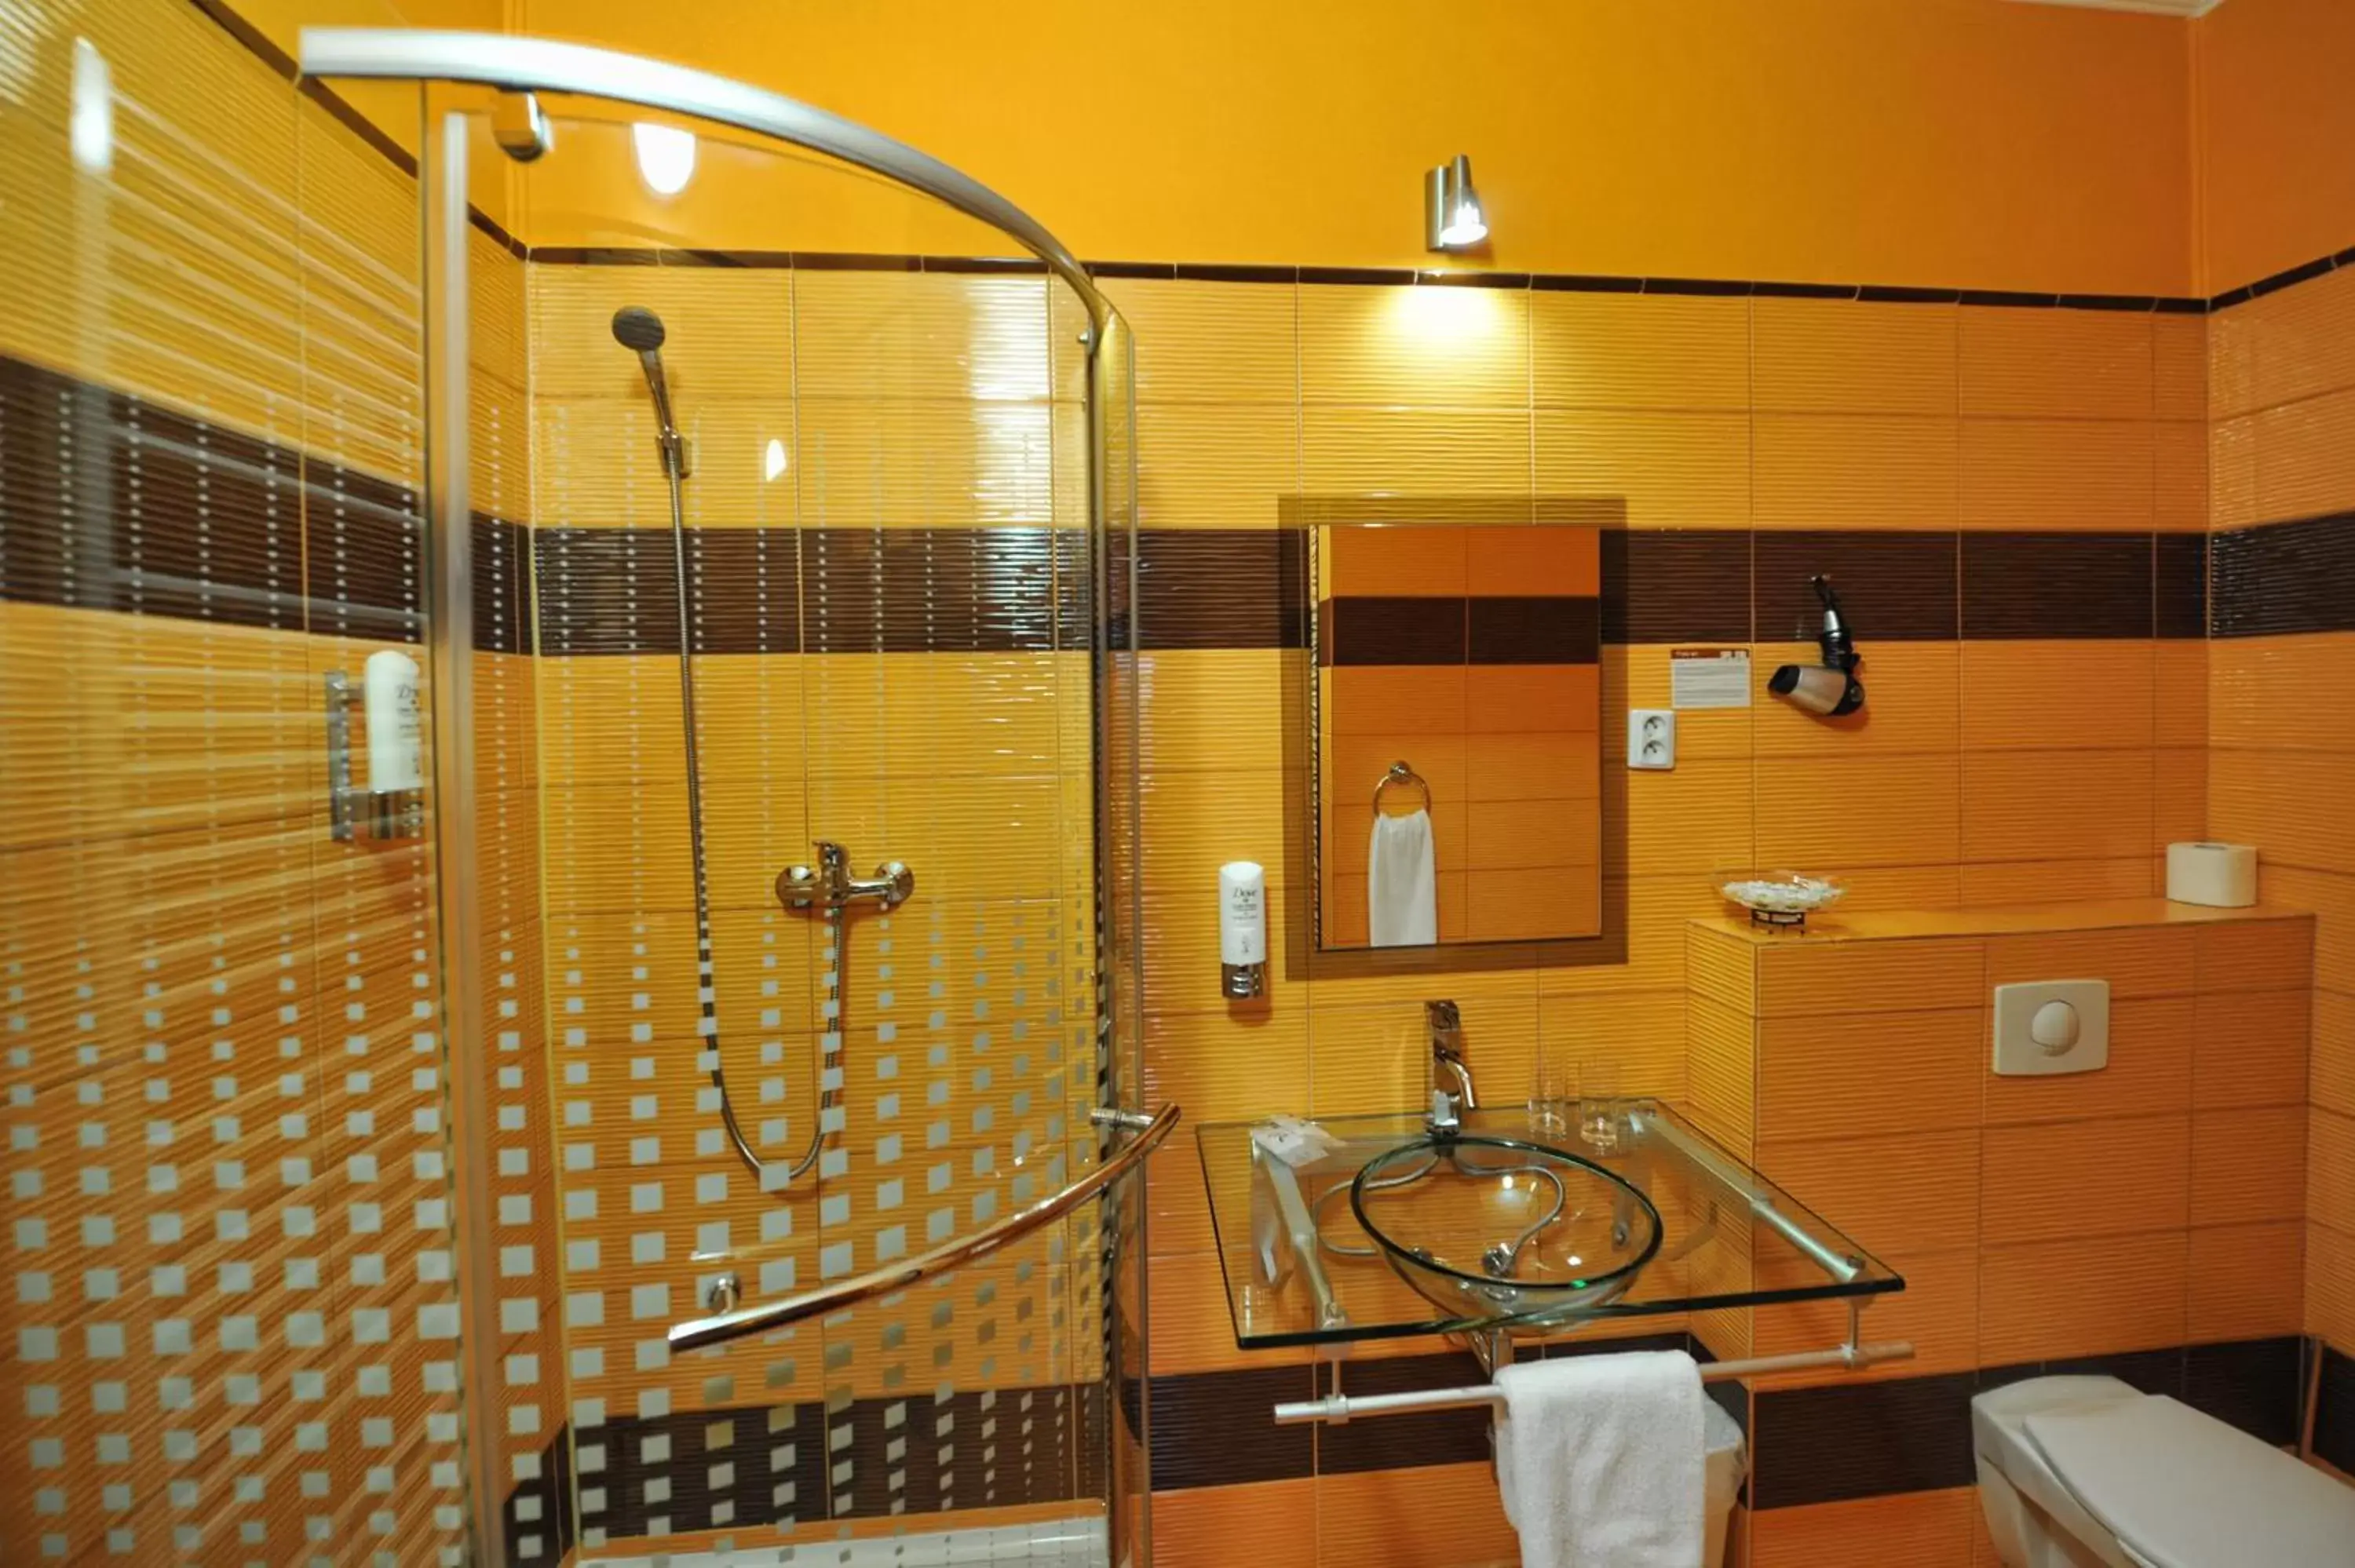 Bathroom in Hotel Arte